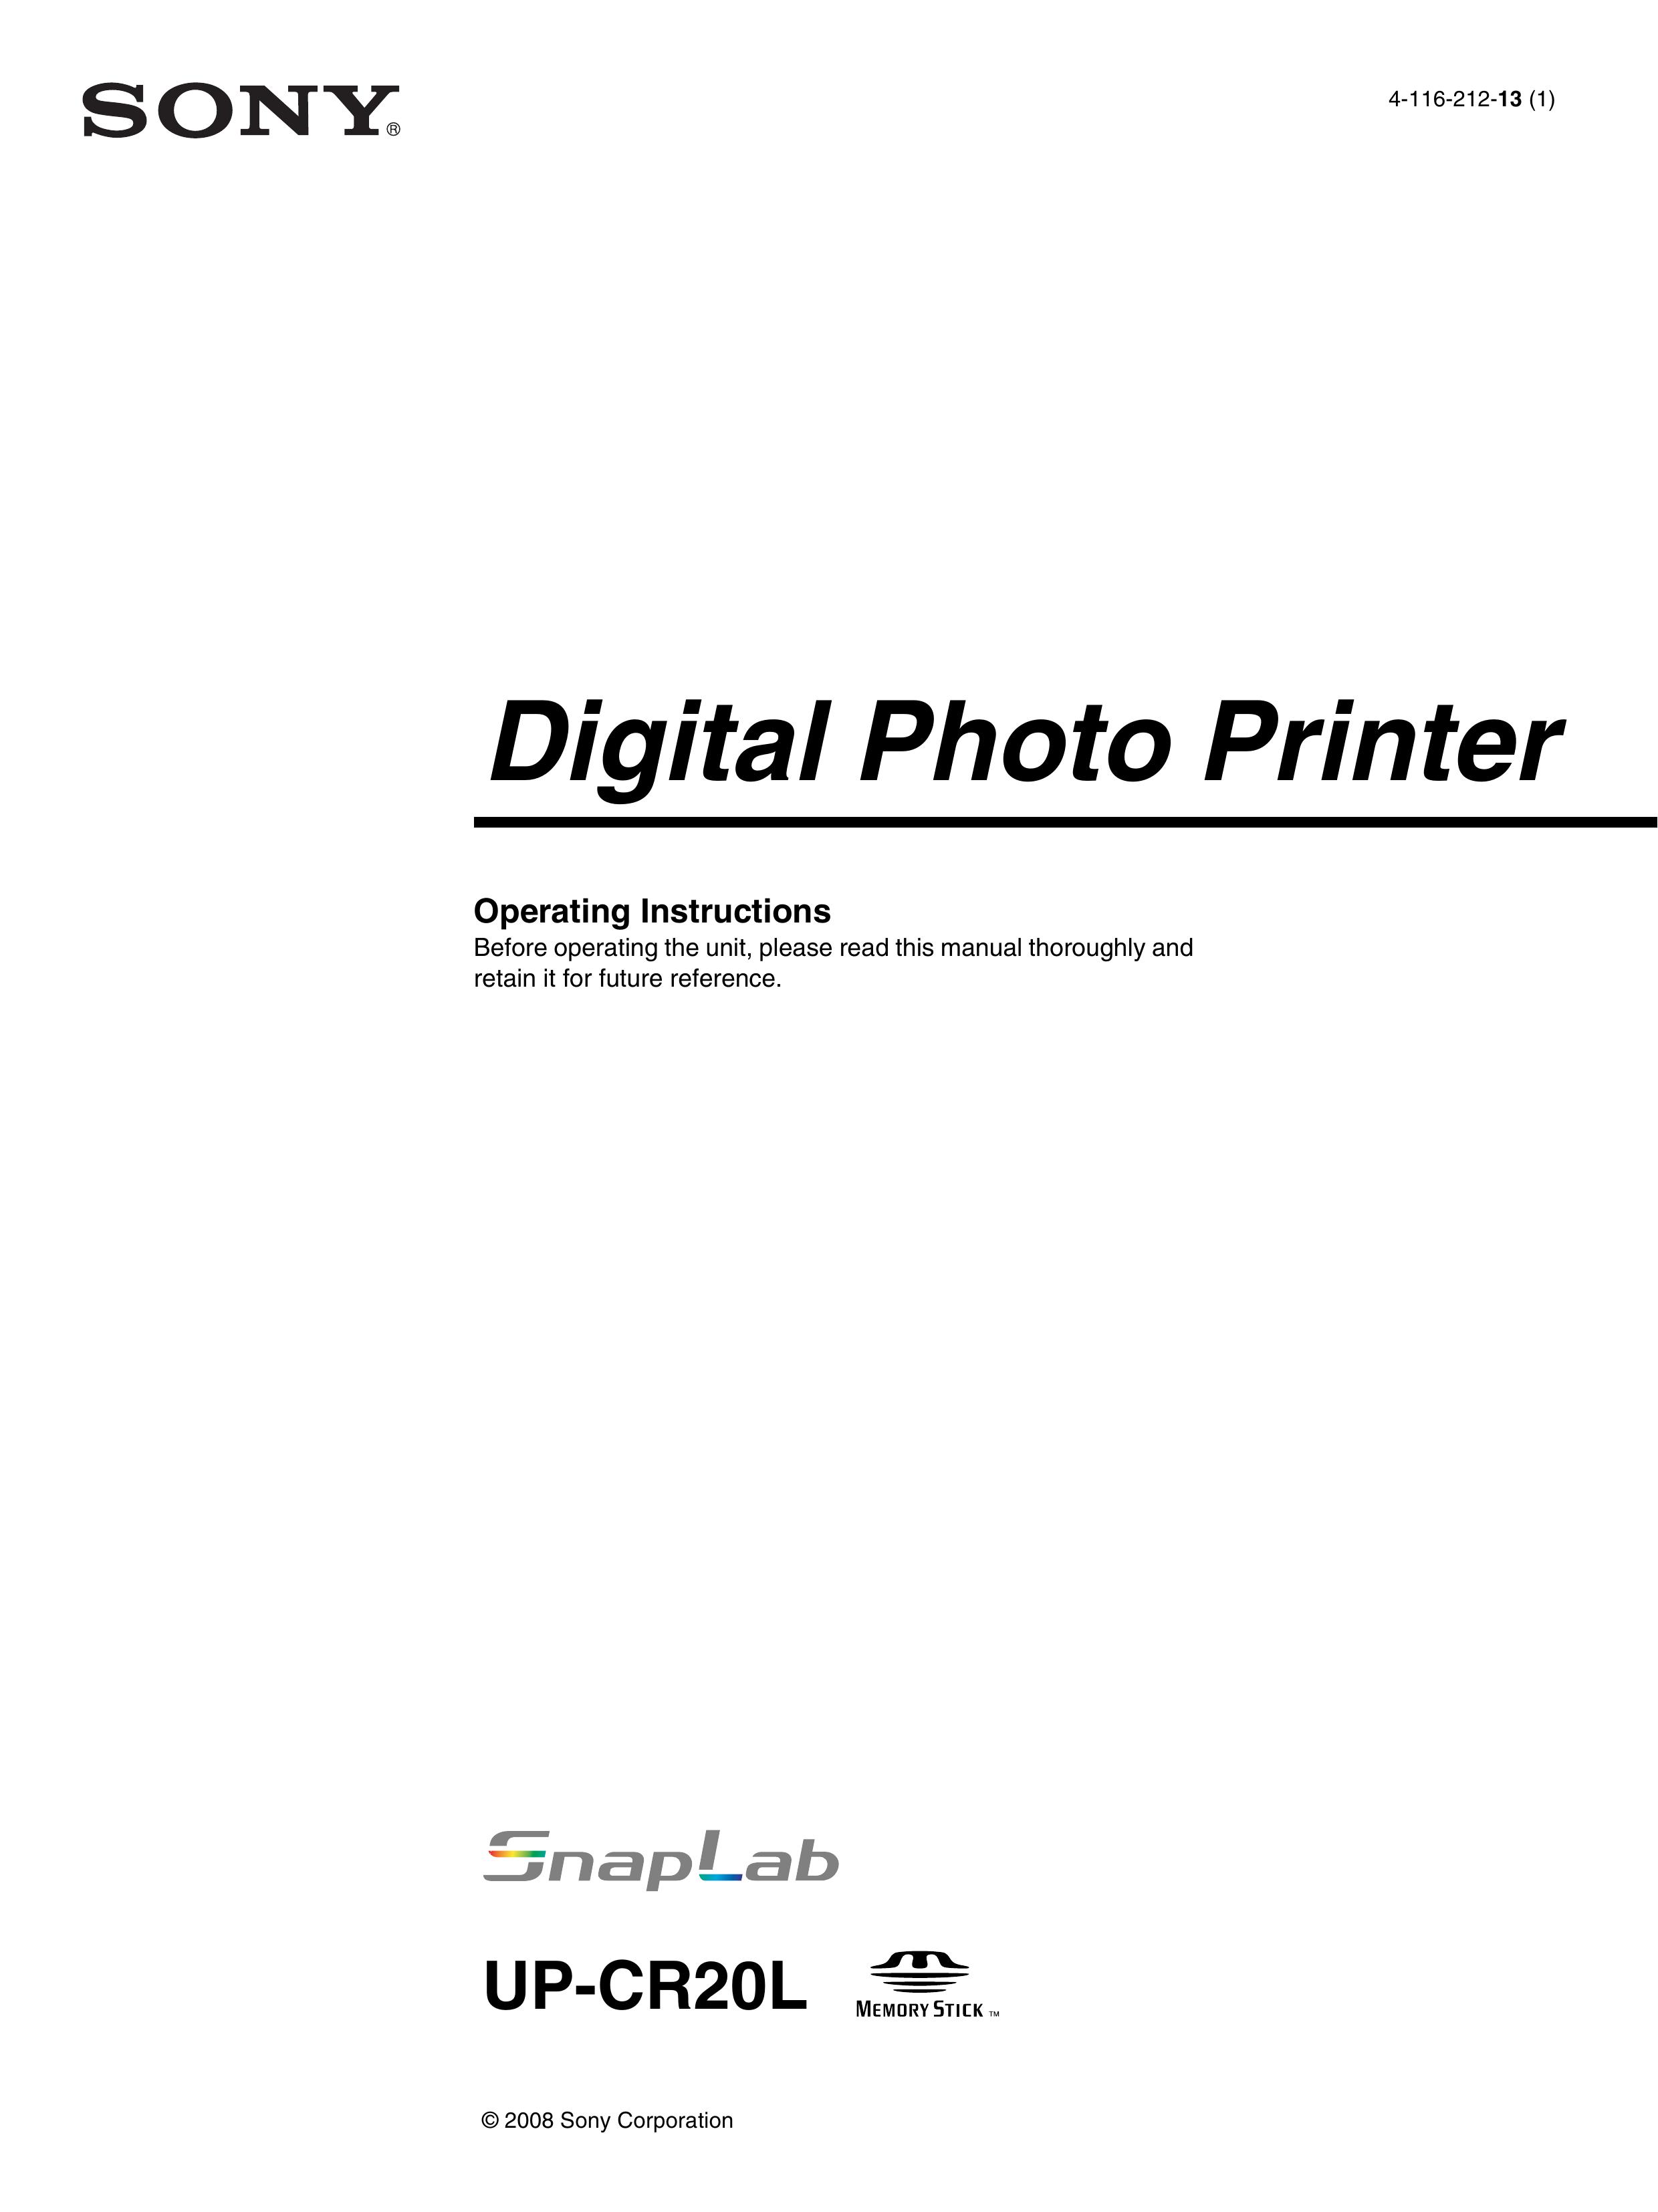 Sony UP-CR20L Photo Printer User Manual